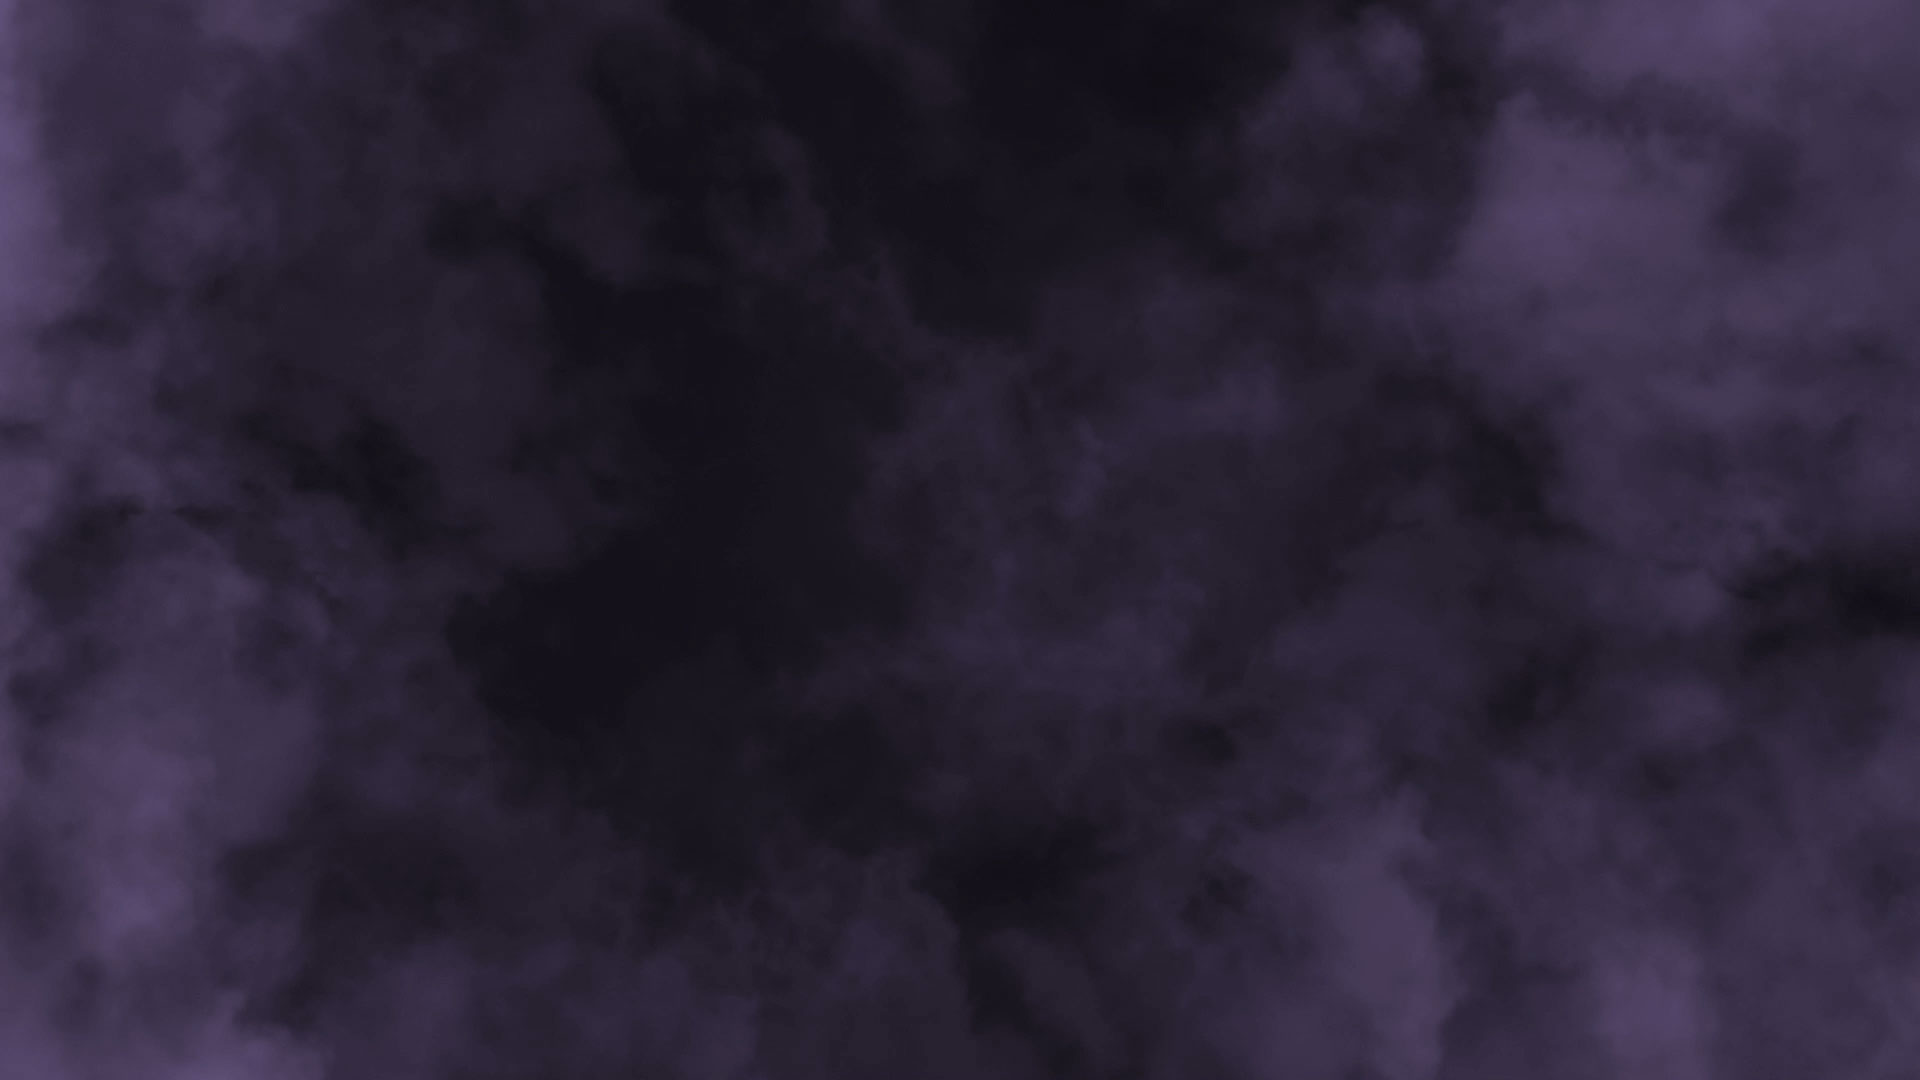 Animated purple smoke background